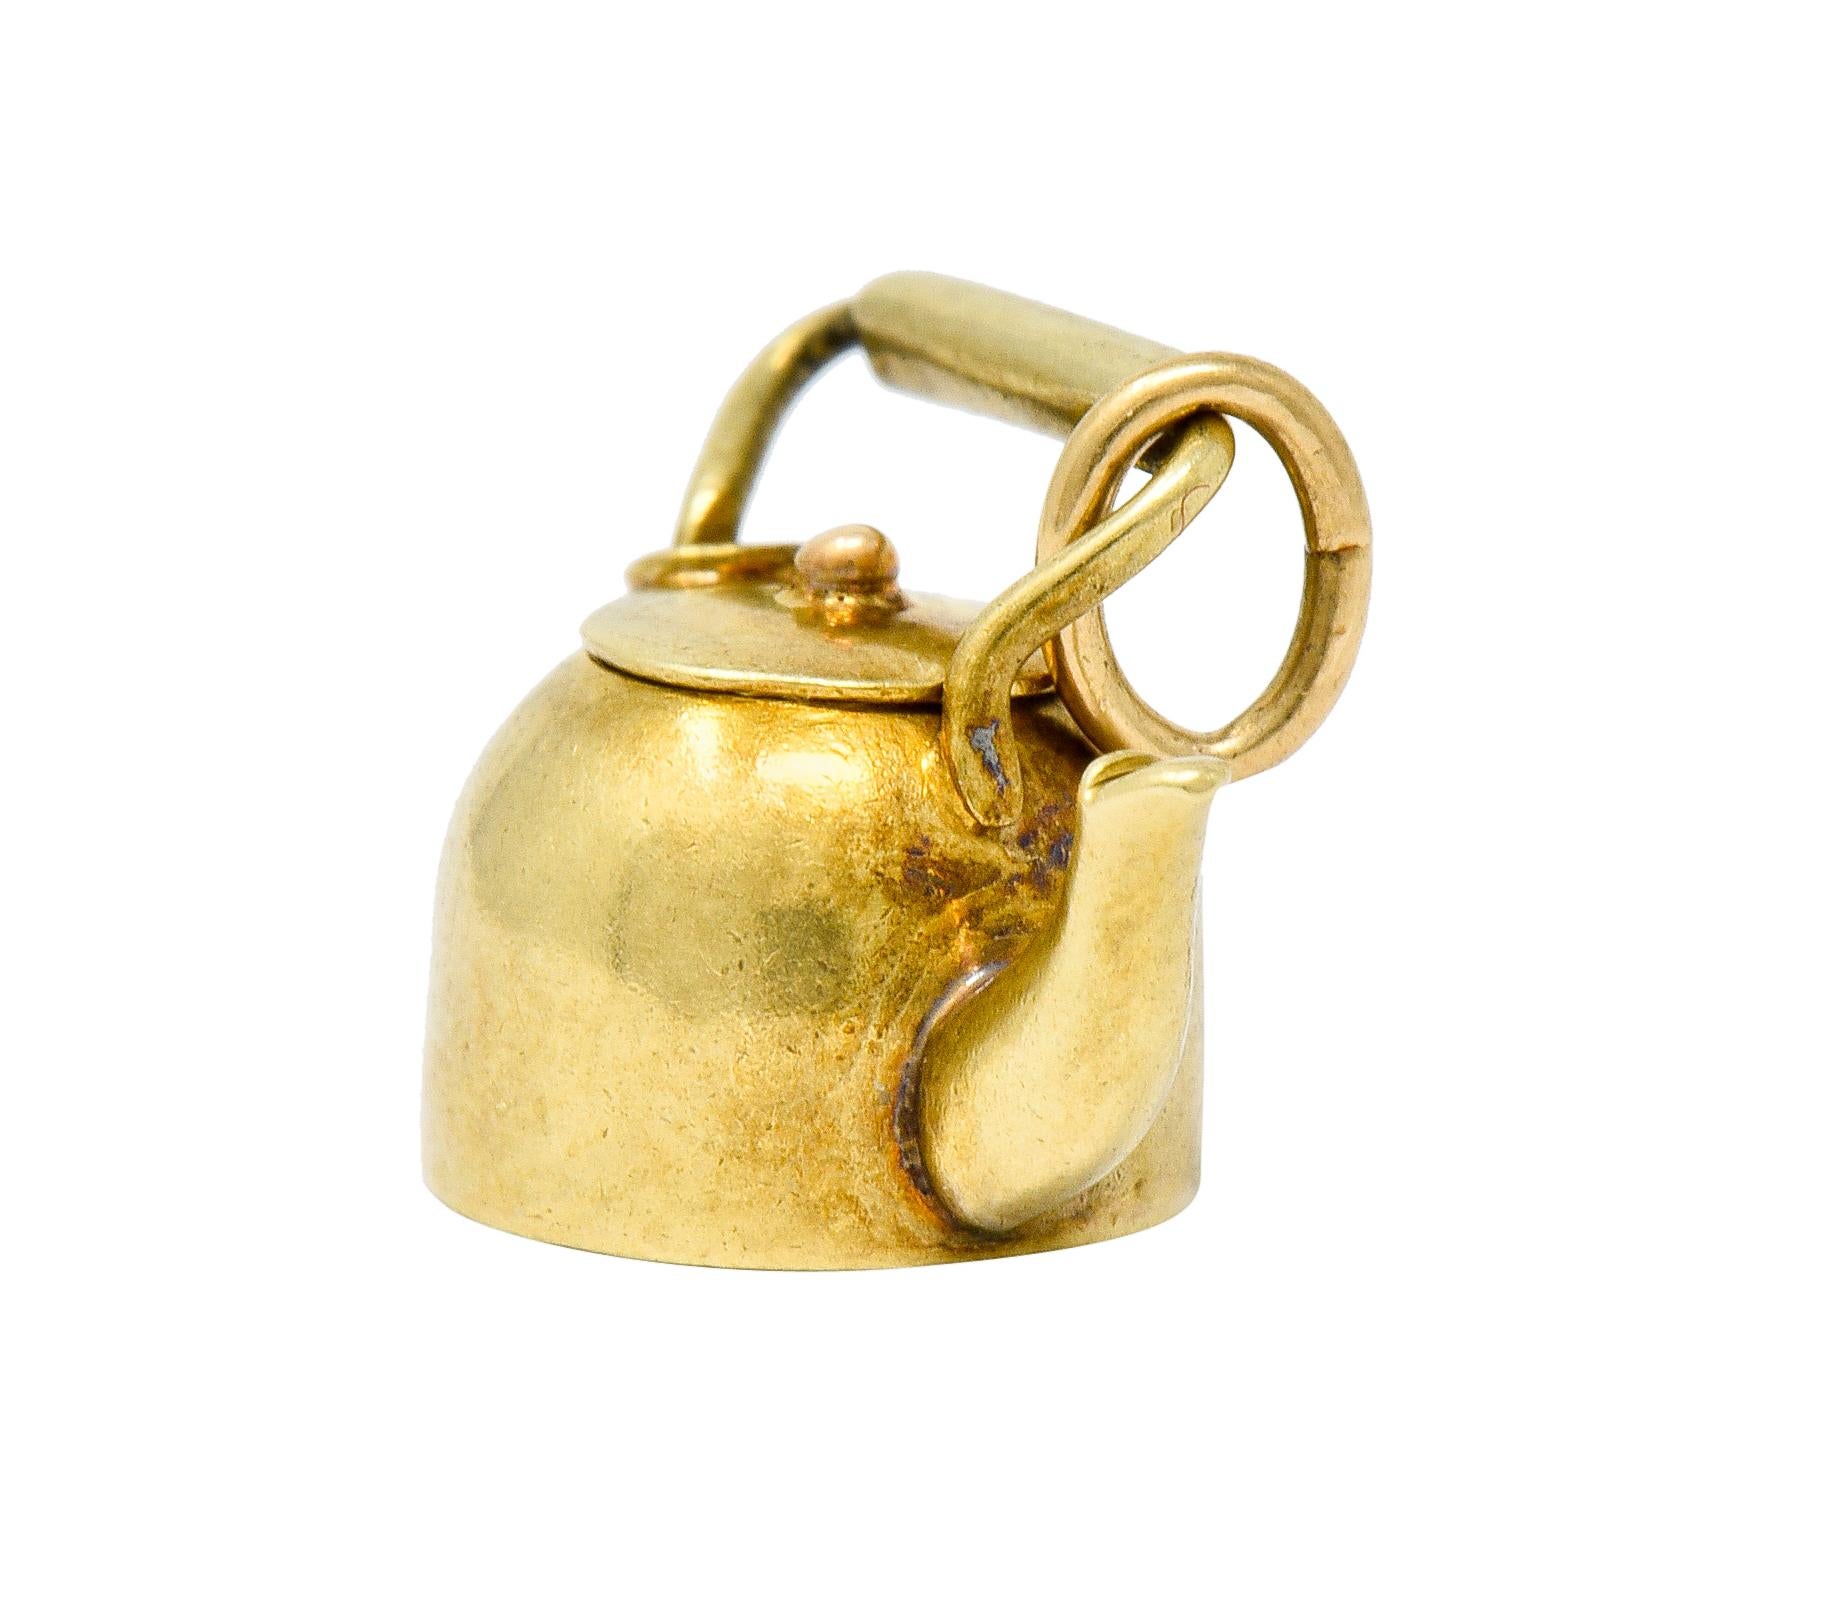 Sloan & Co. Art Nouveau 14 Karat Gold Tea Kettle Charm 1